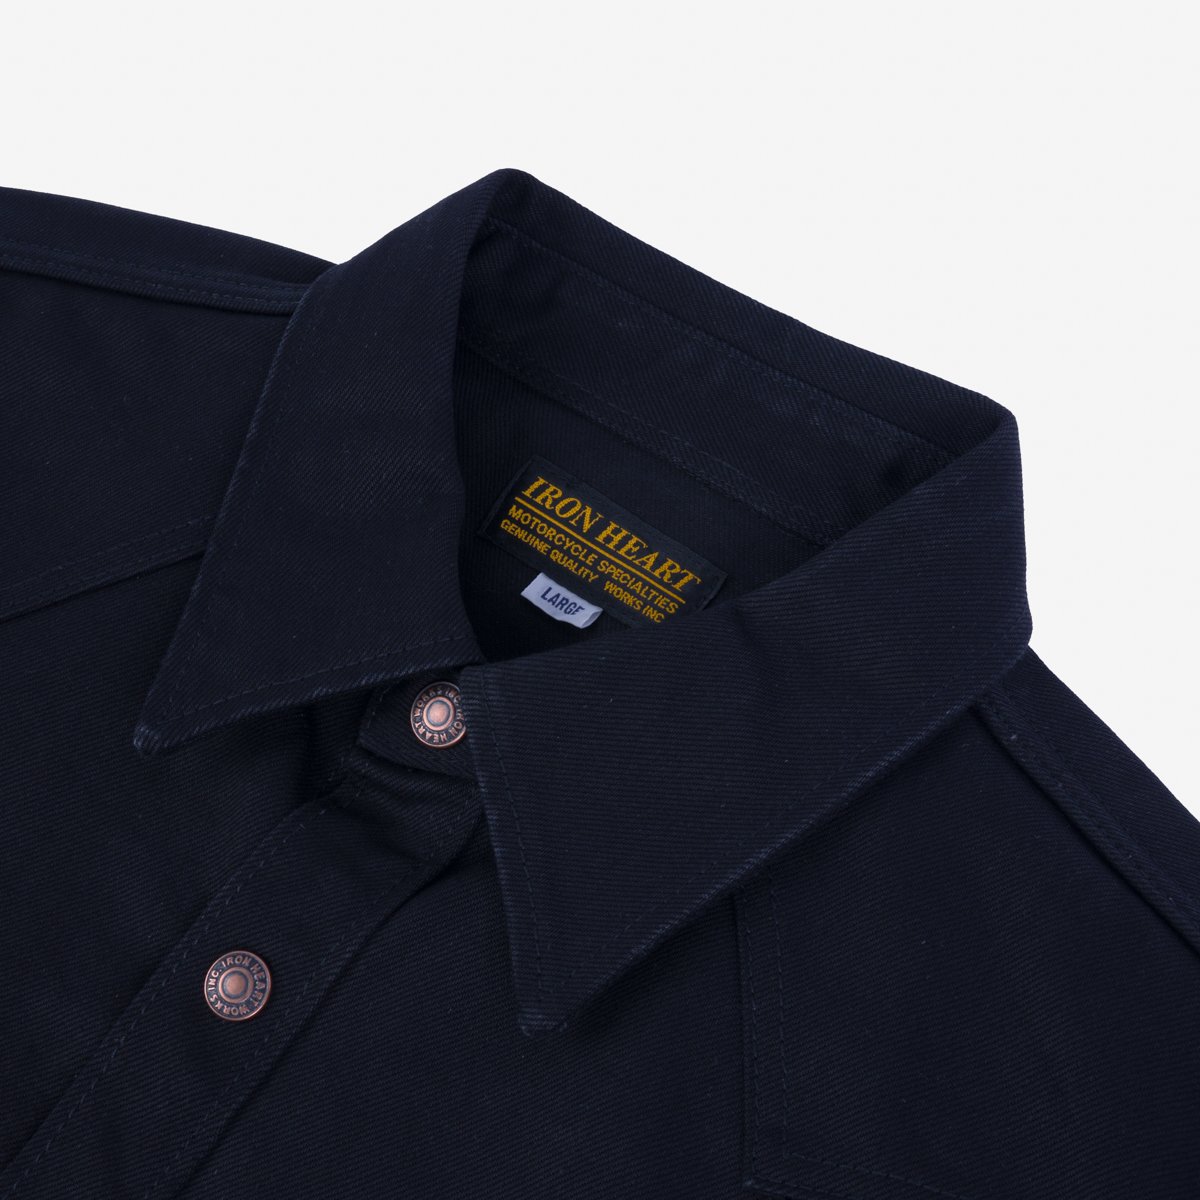 16oz Non-Selvedge Denim CPO Shirt - Superblack (Fades To Grey)